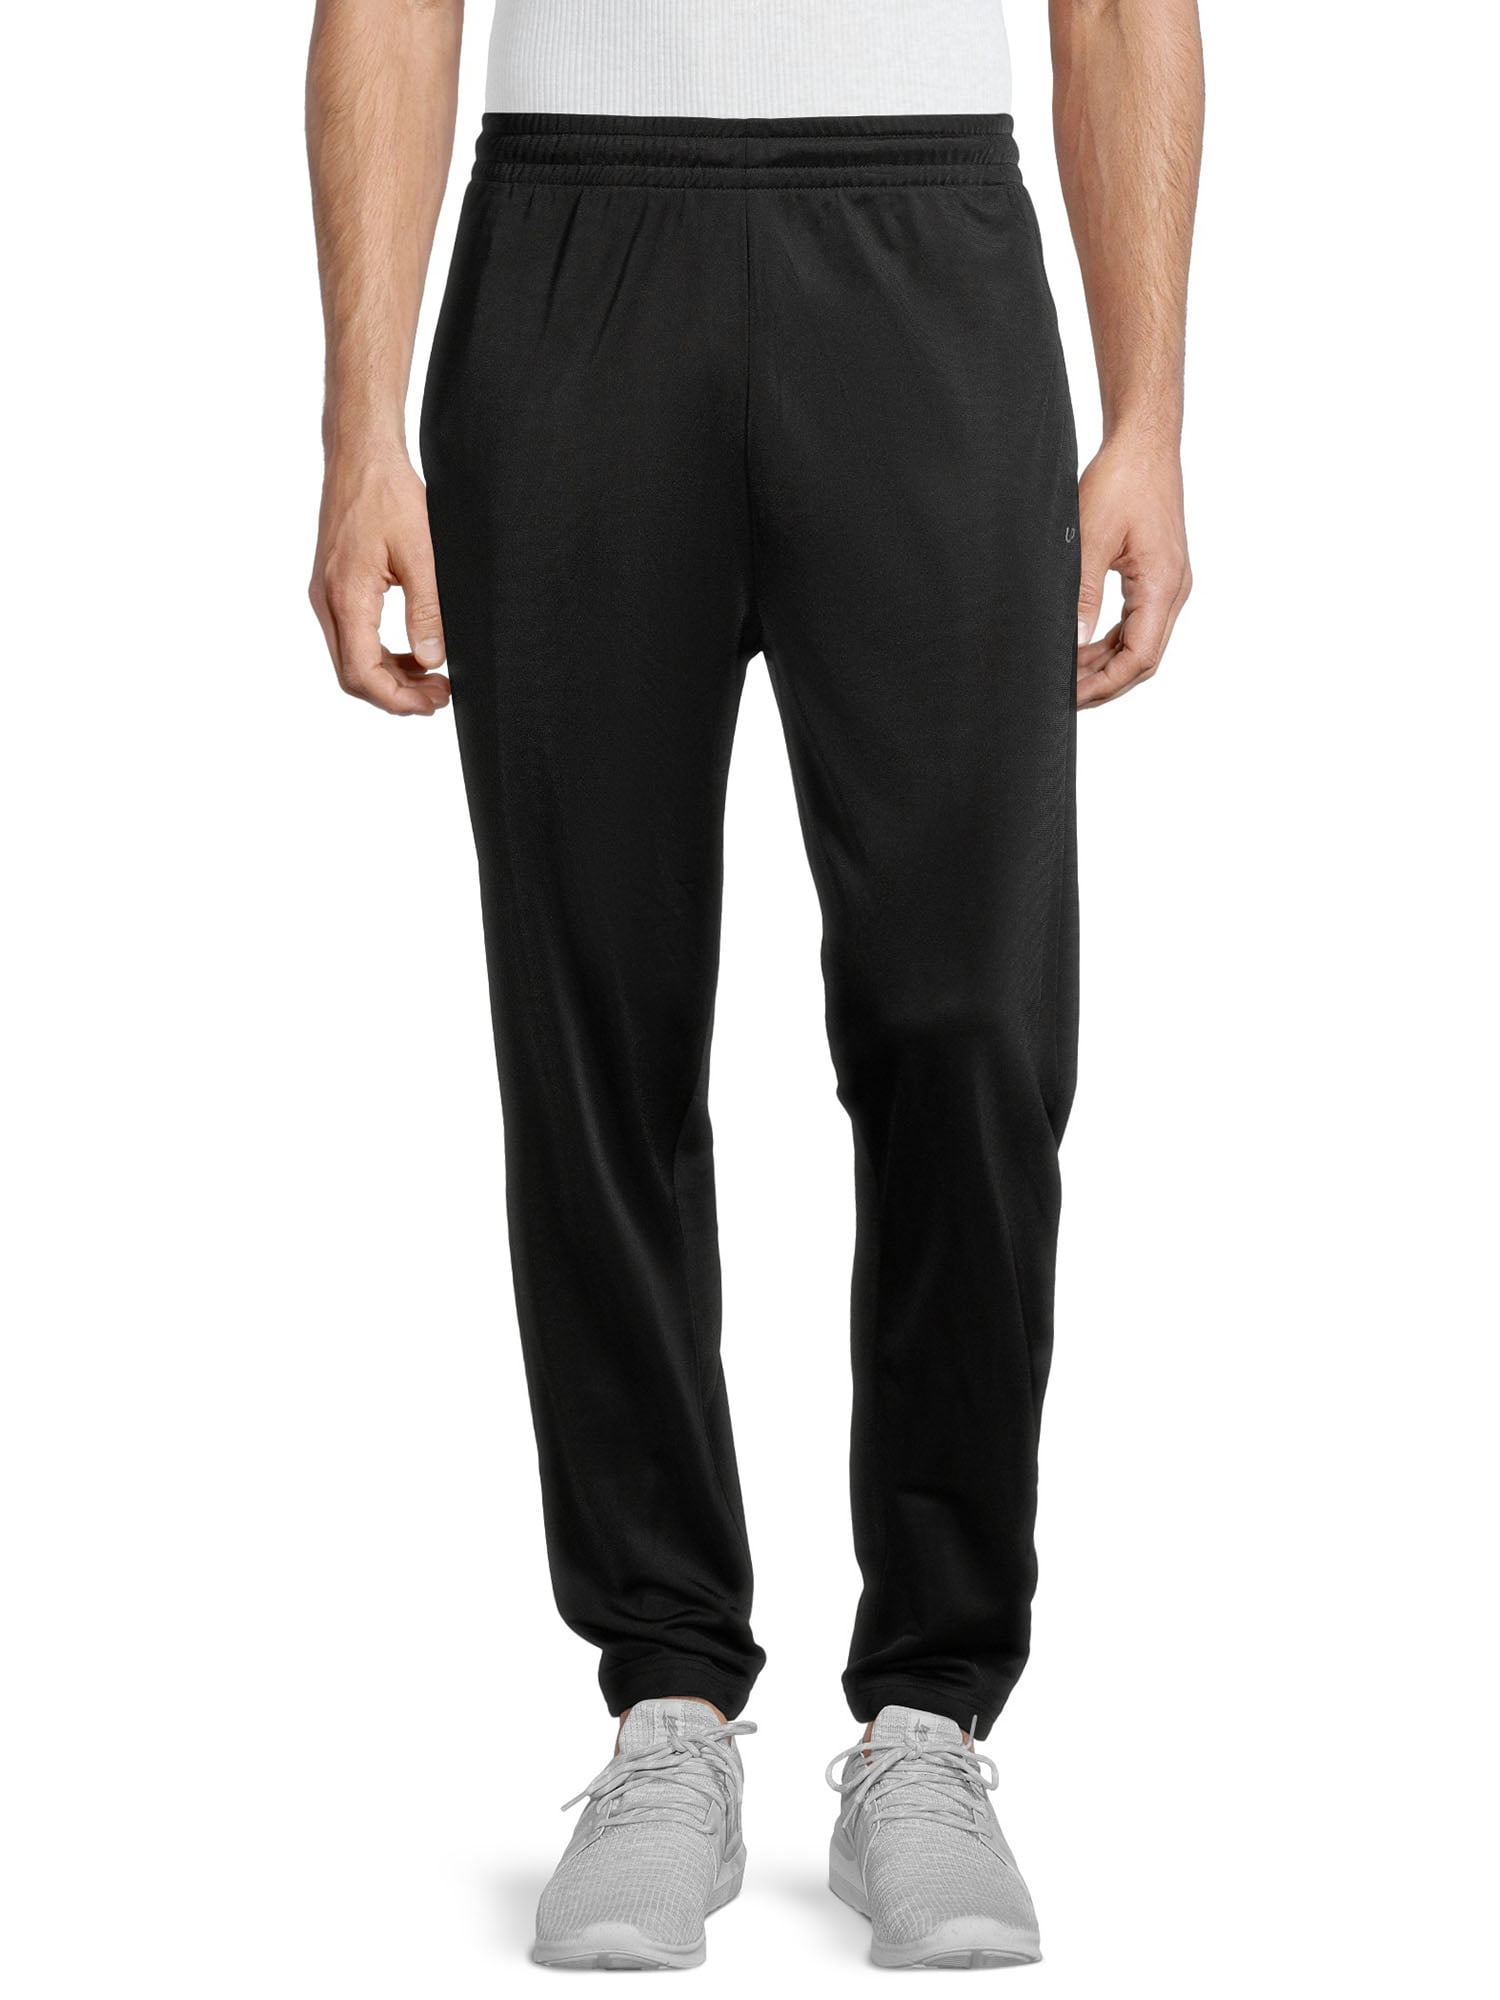 Unipro Men's Tricot Solid Pants - Walmart.com